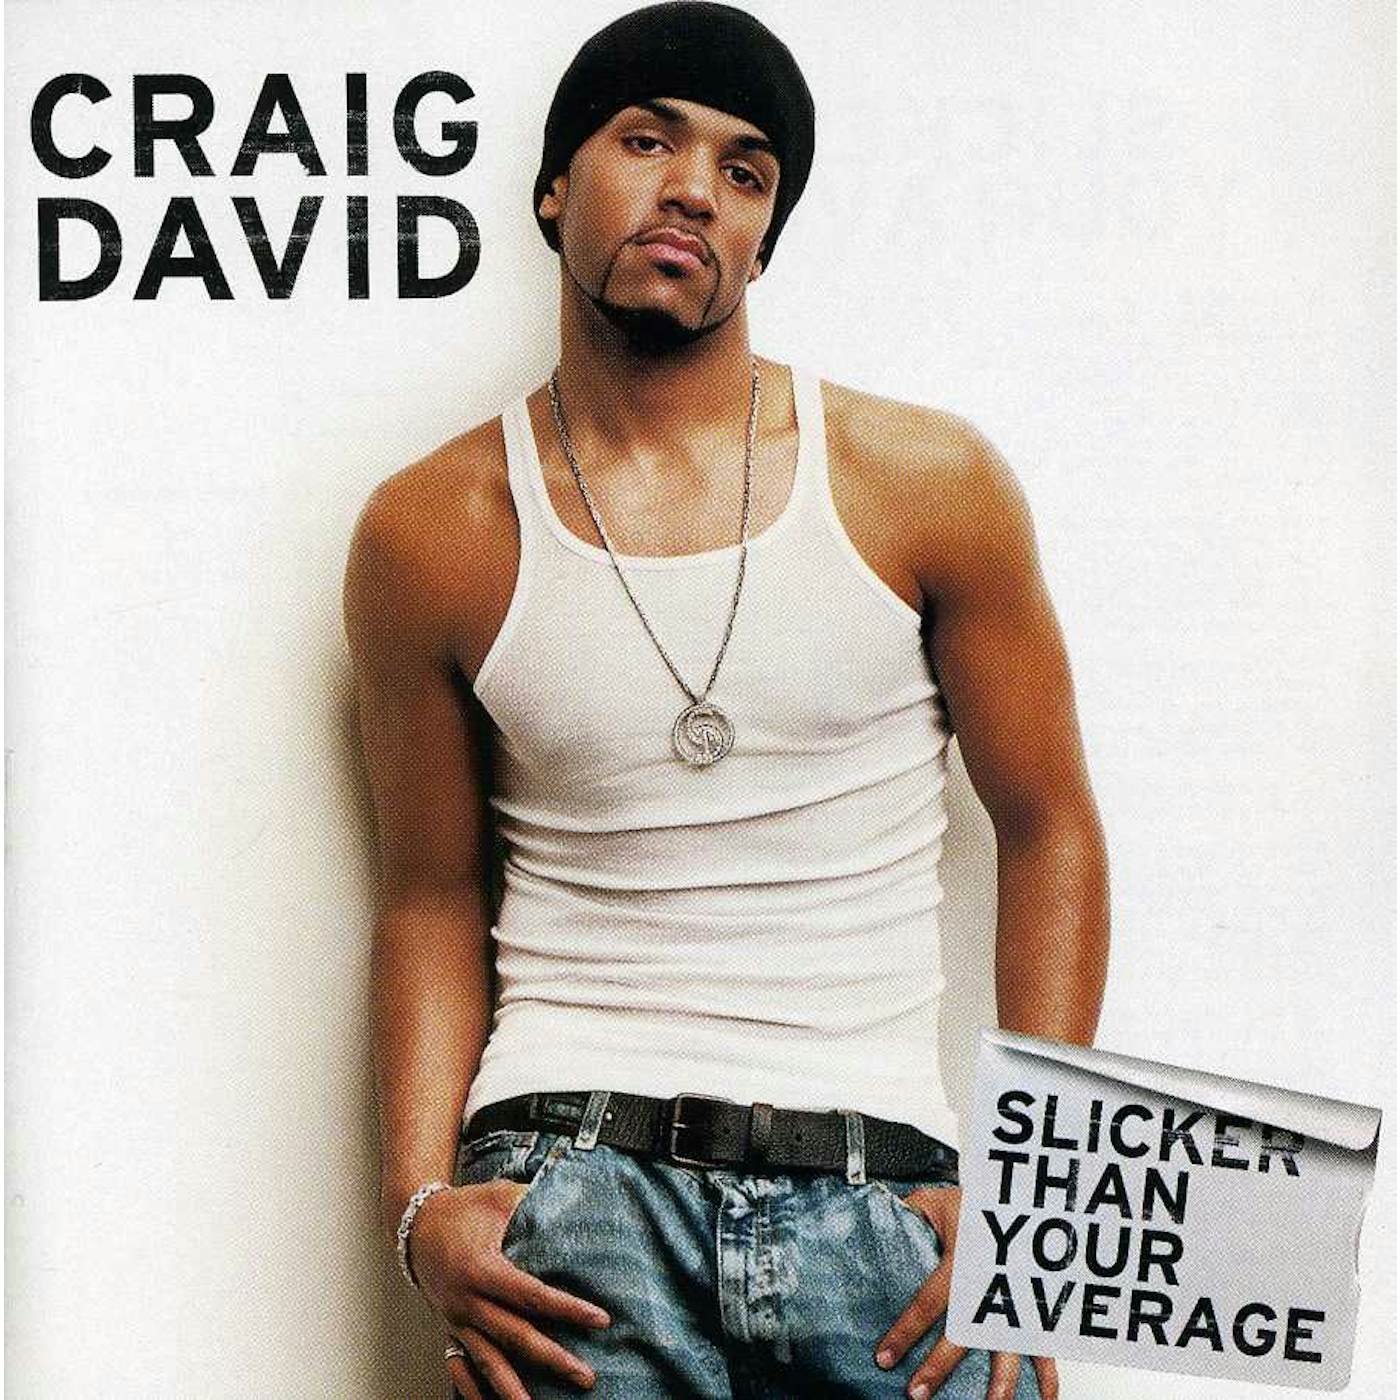 Craig David SLICKER THAN YOUR AVERAGE CD